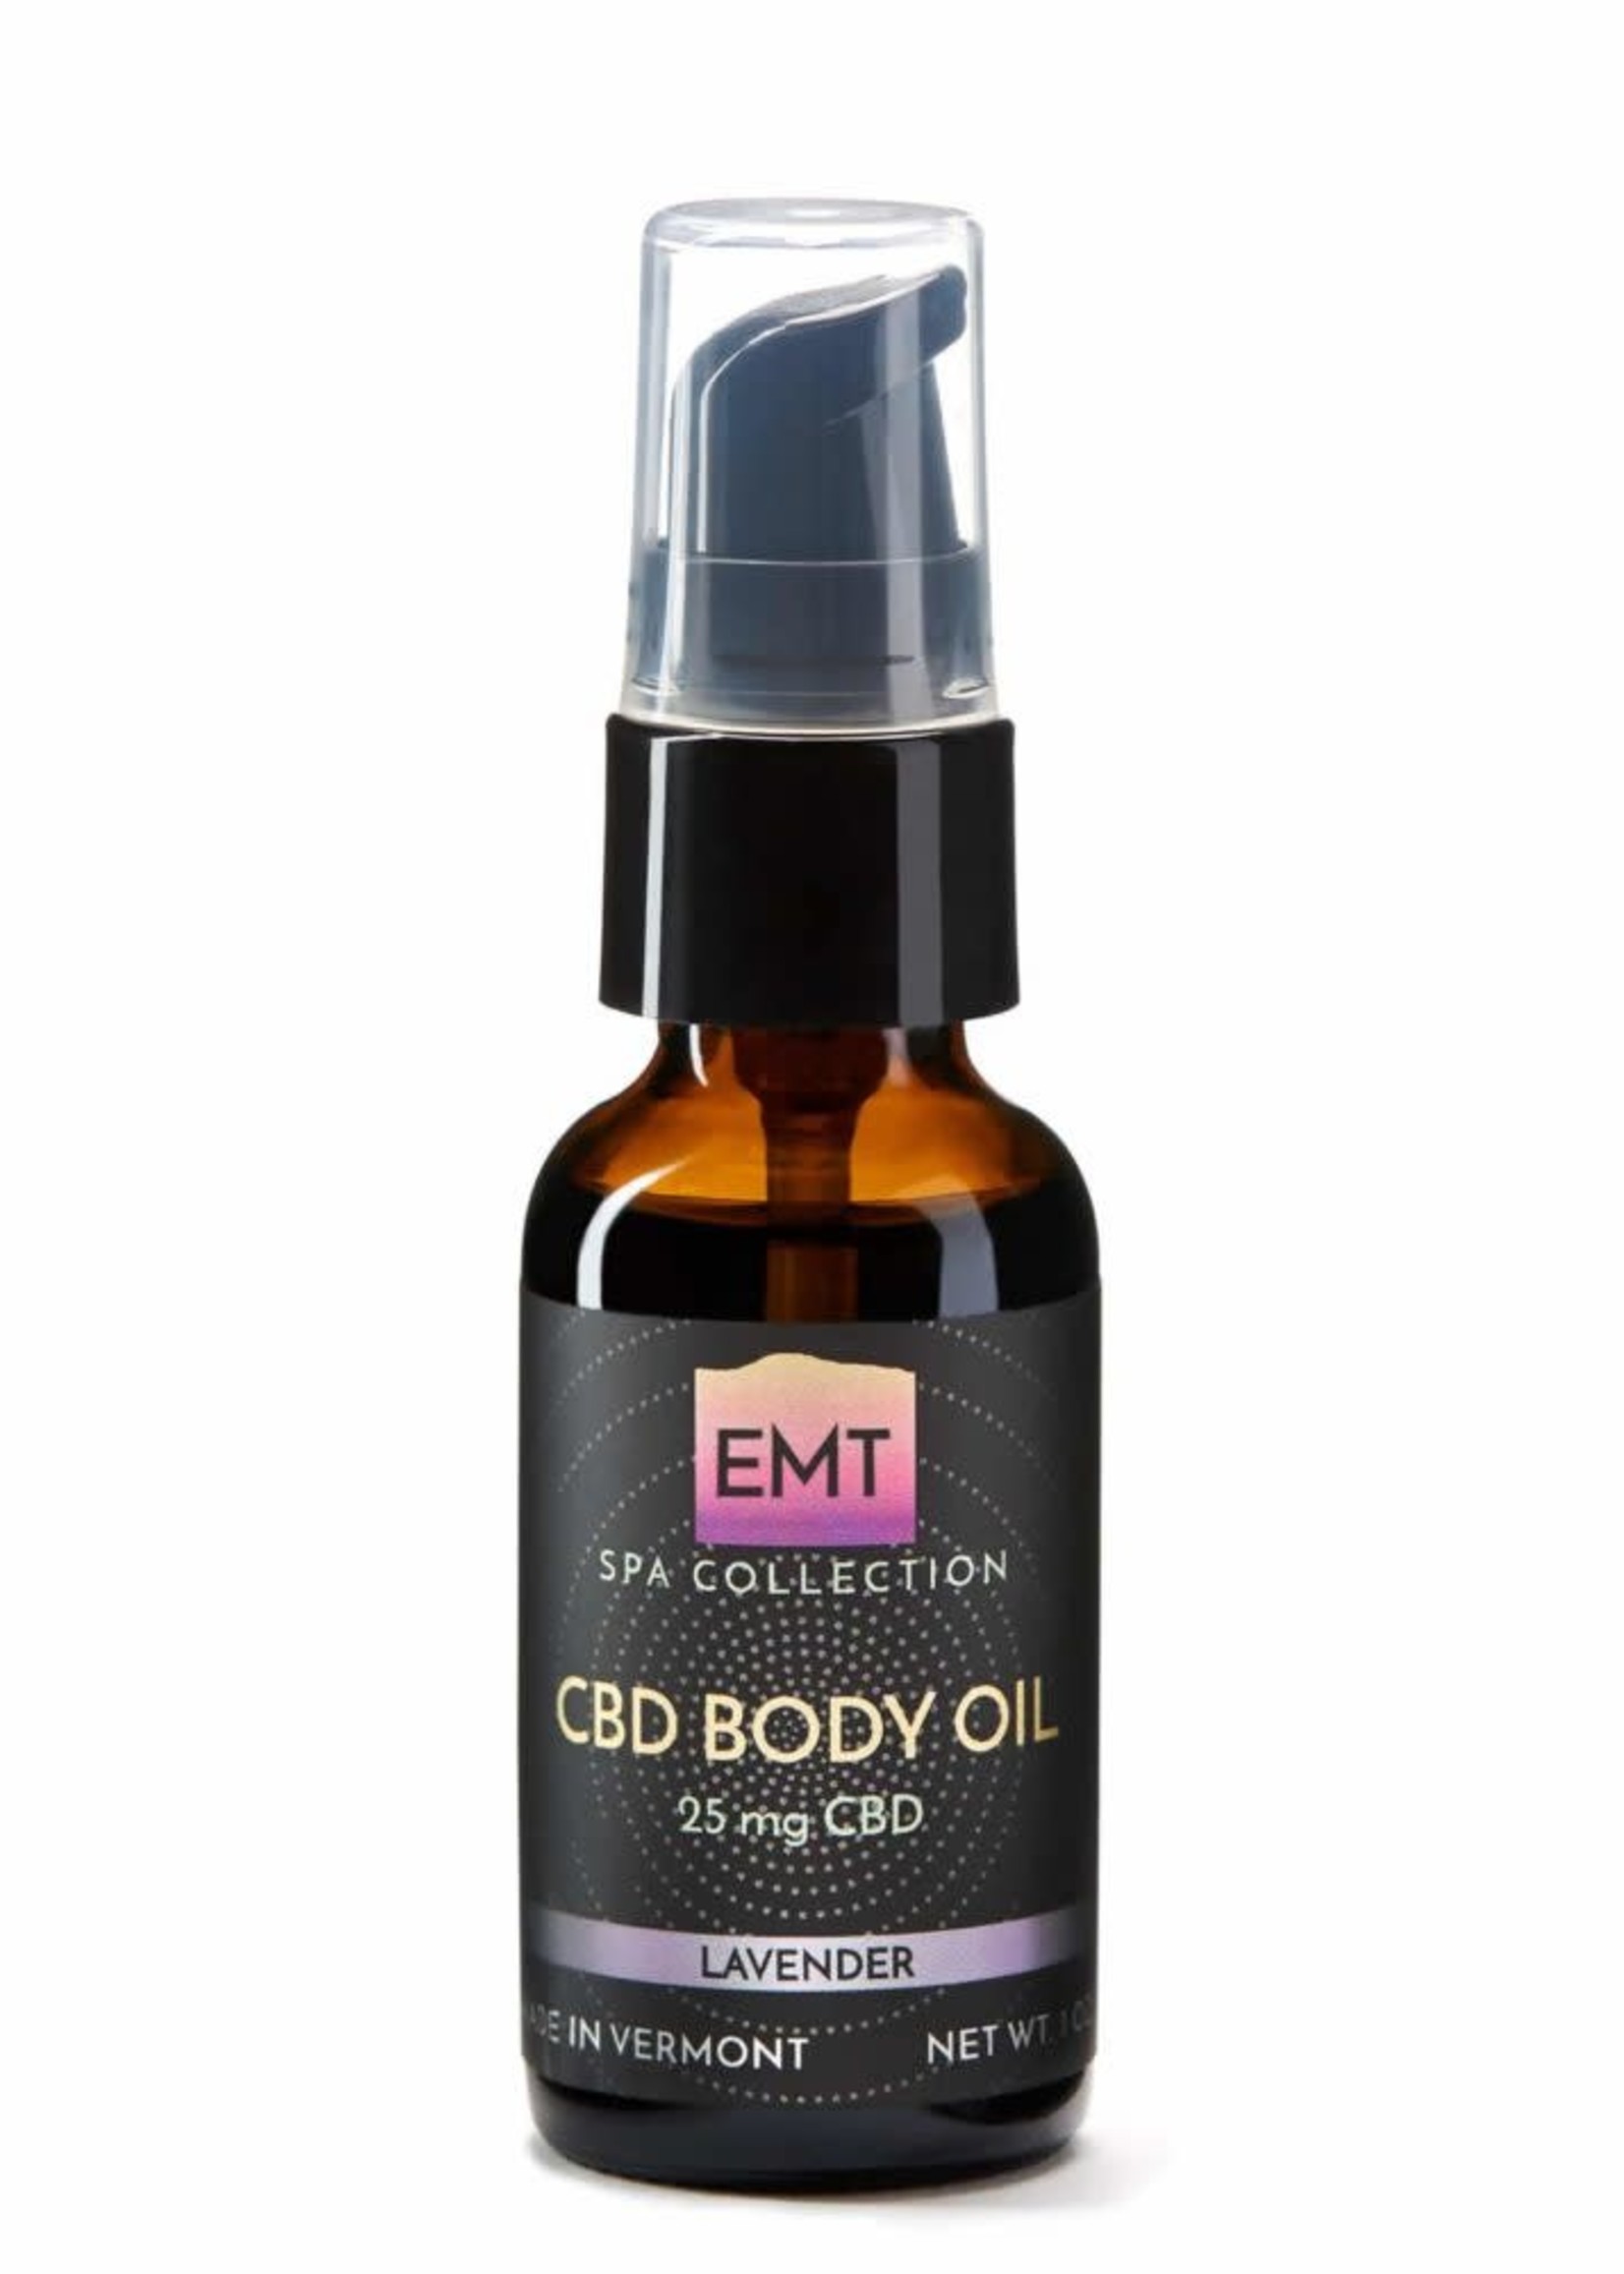 Elmore Mountain Therapeutics EMT, CBD Body Oil, 25mg, Lavender, 1oz